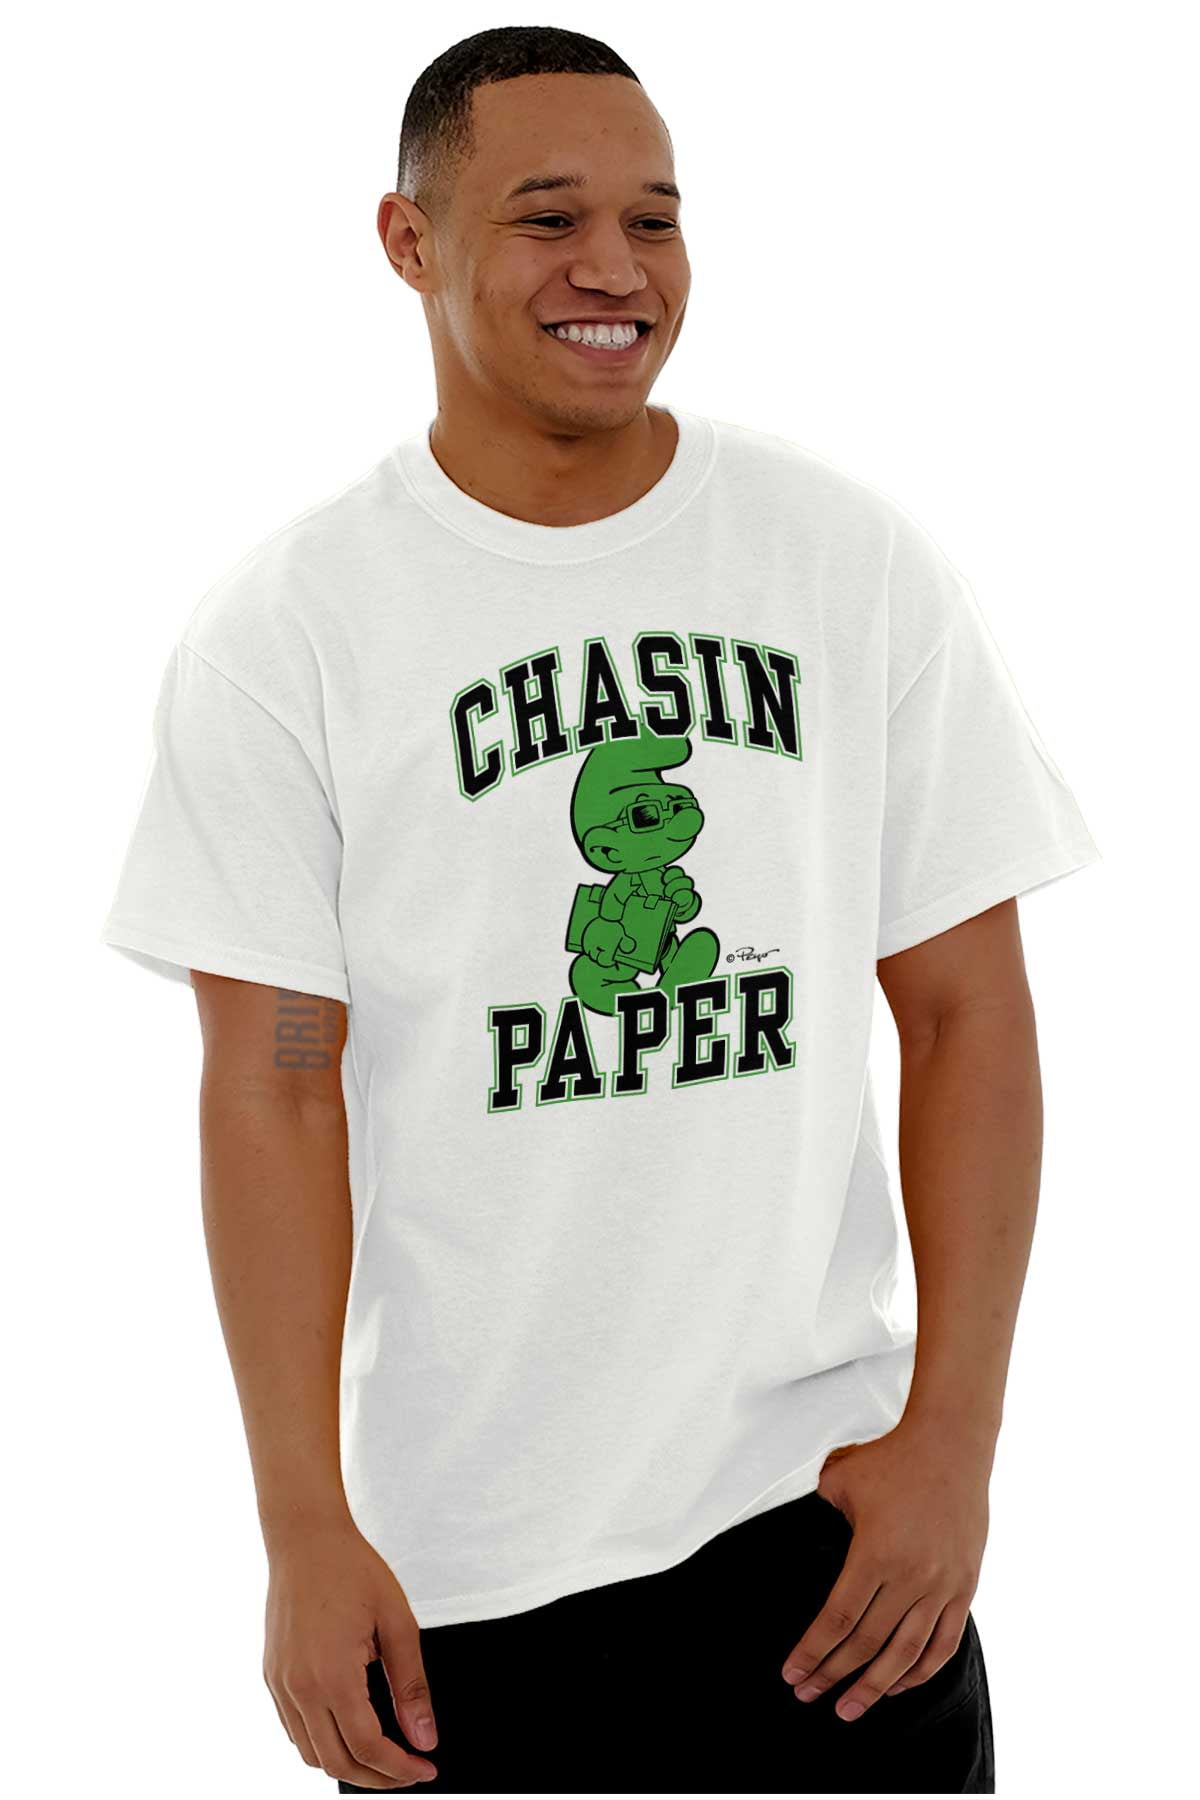 Smurf Chasin Paper Graphic T Shirt Men or Women Brisco Brands Walmart.com